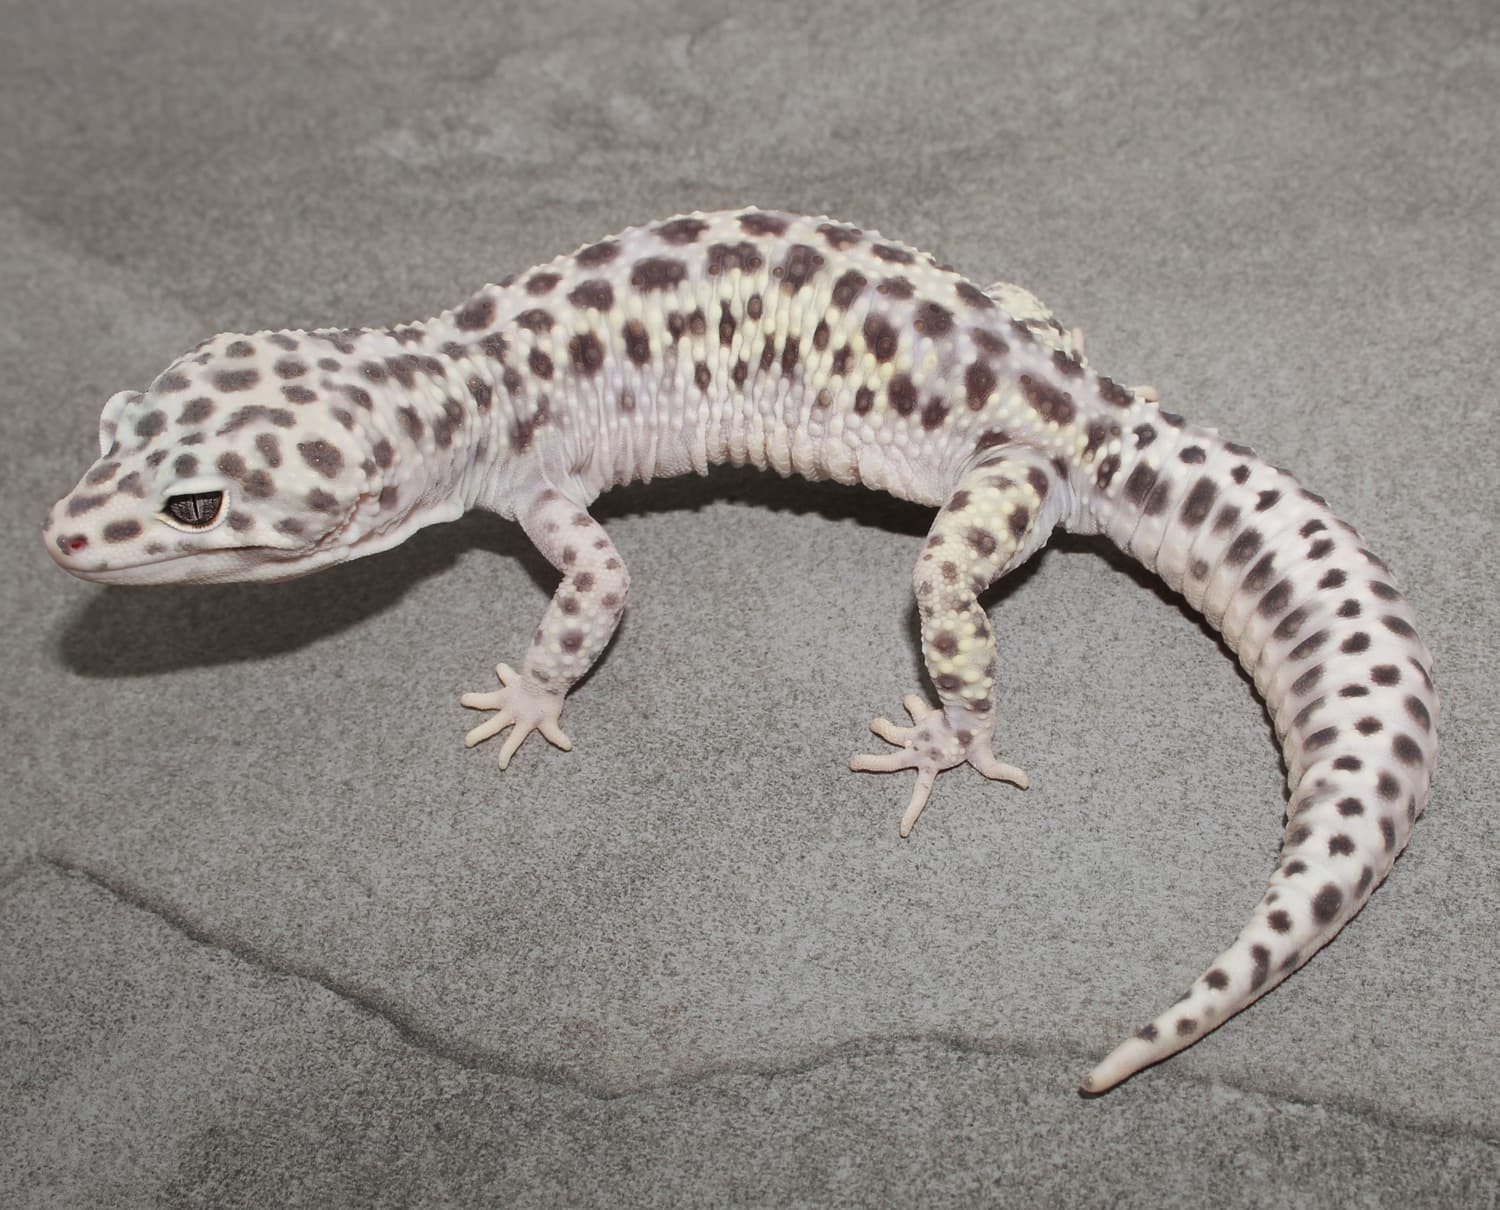 Gem Snow Leopard Gecko by Impeccable Gecko